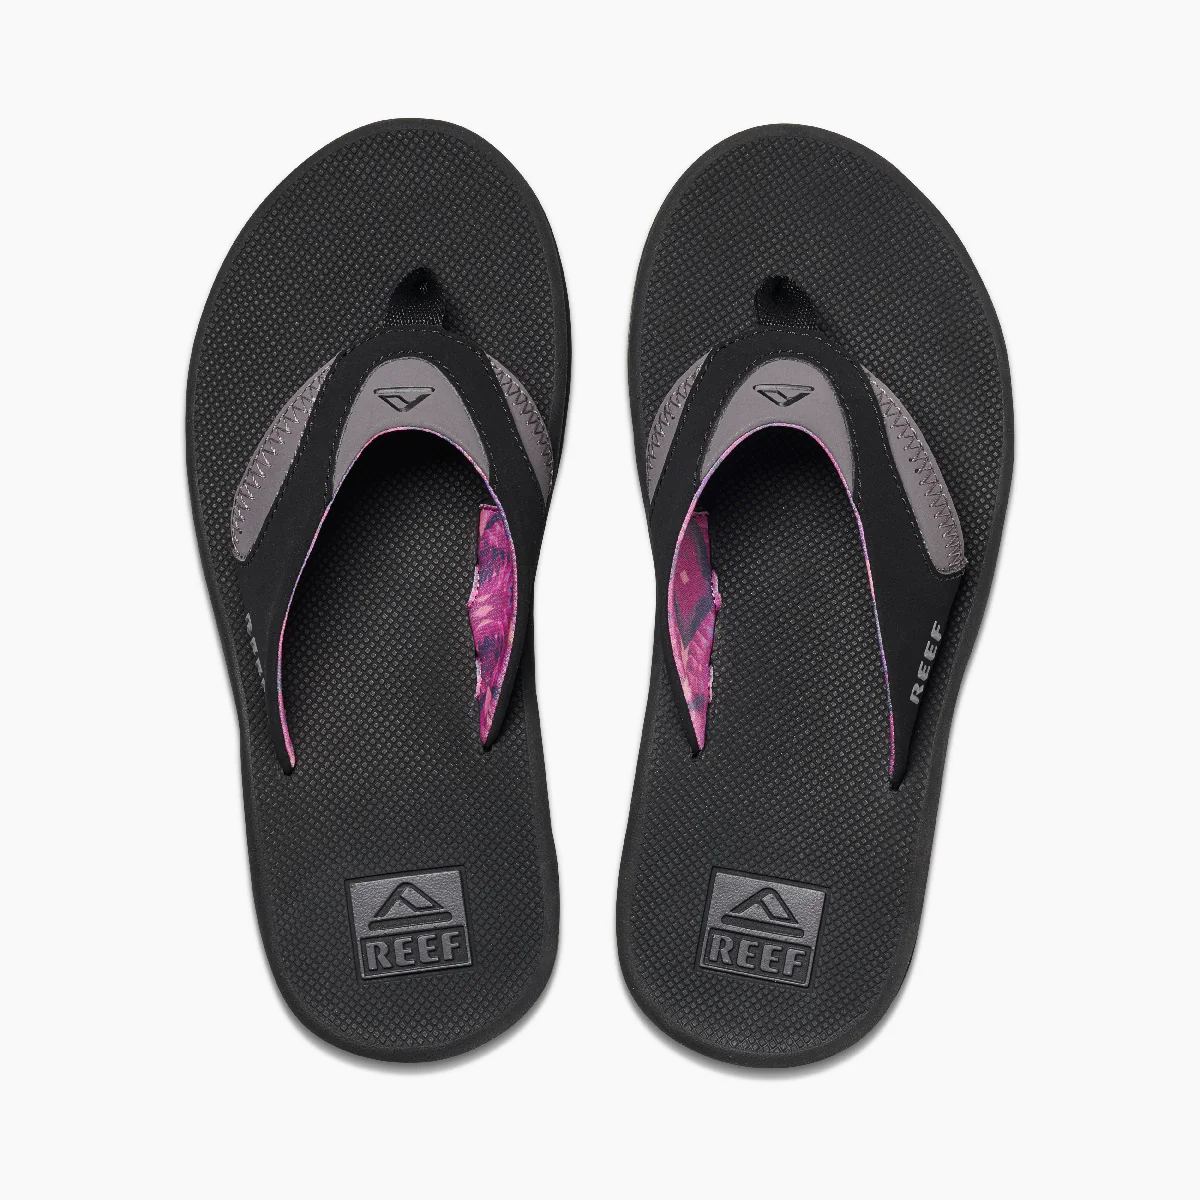 Womens Fanning flip flop sandals in black grey top view